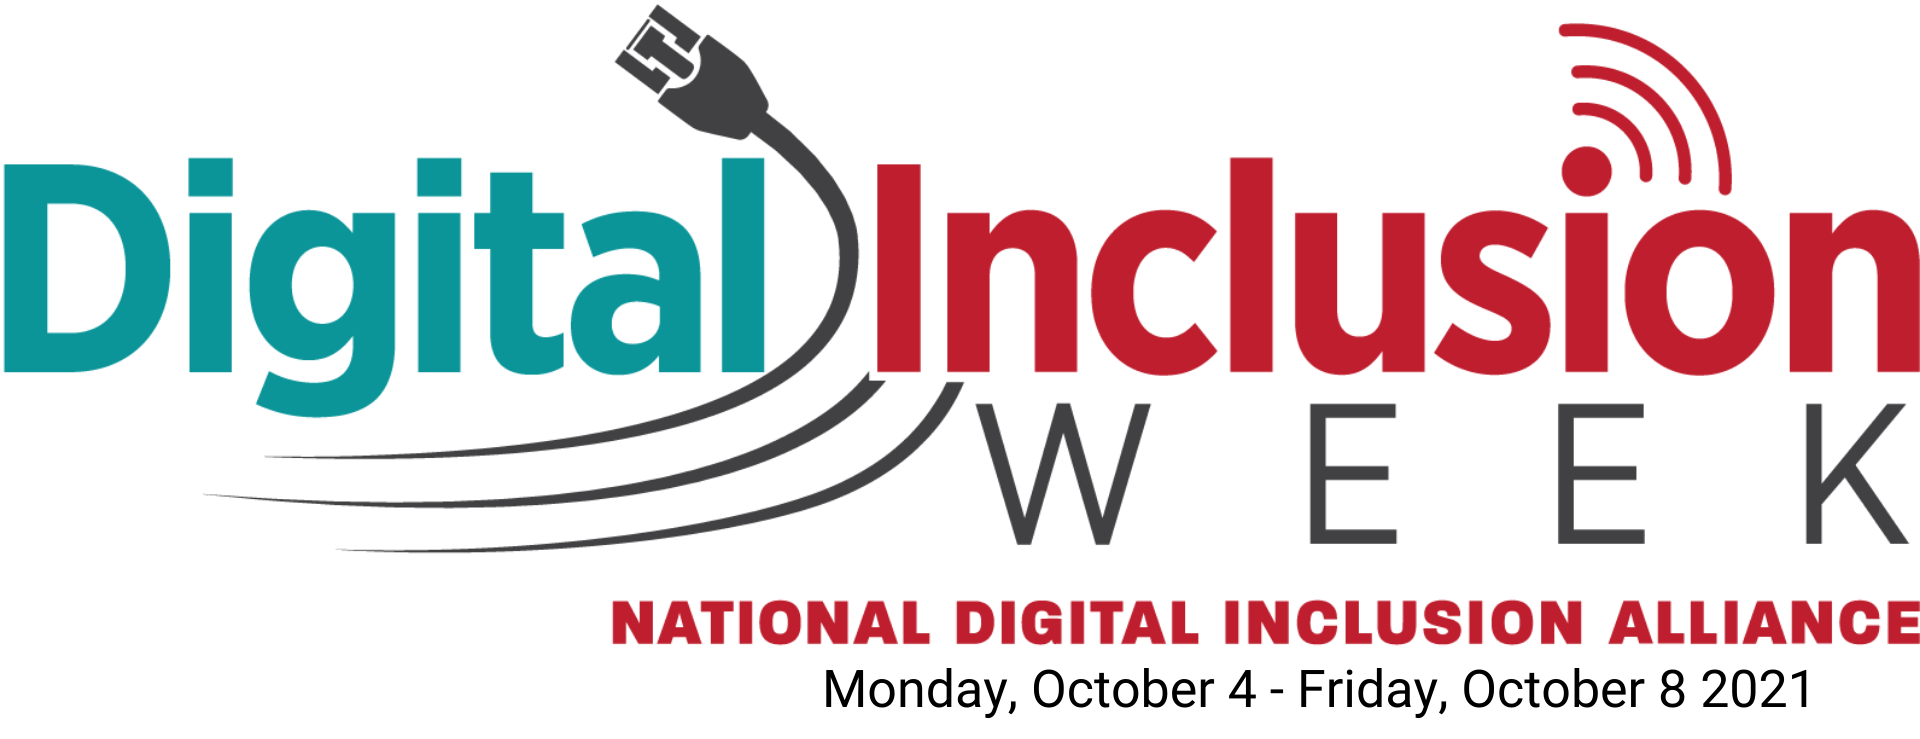 Digital Inclusion Week 2021 Web Banner